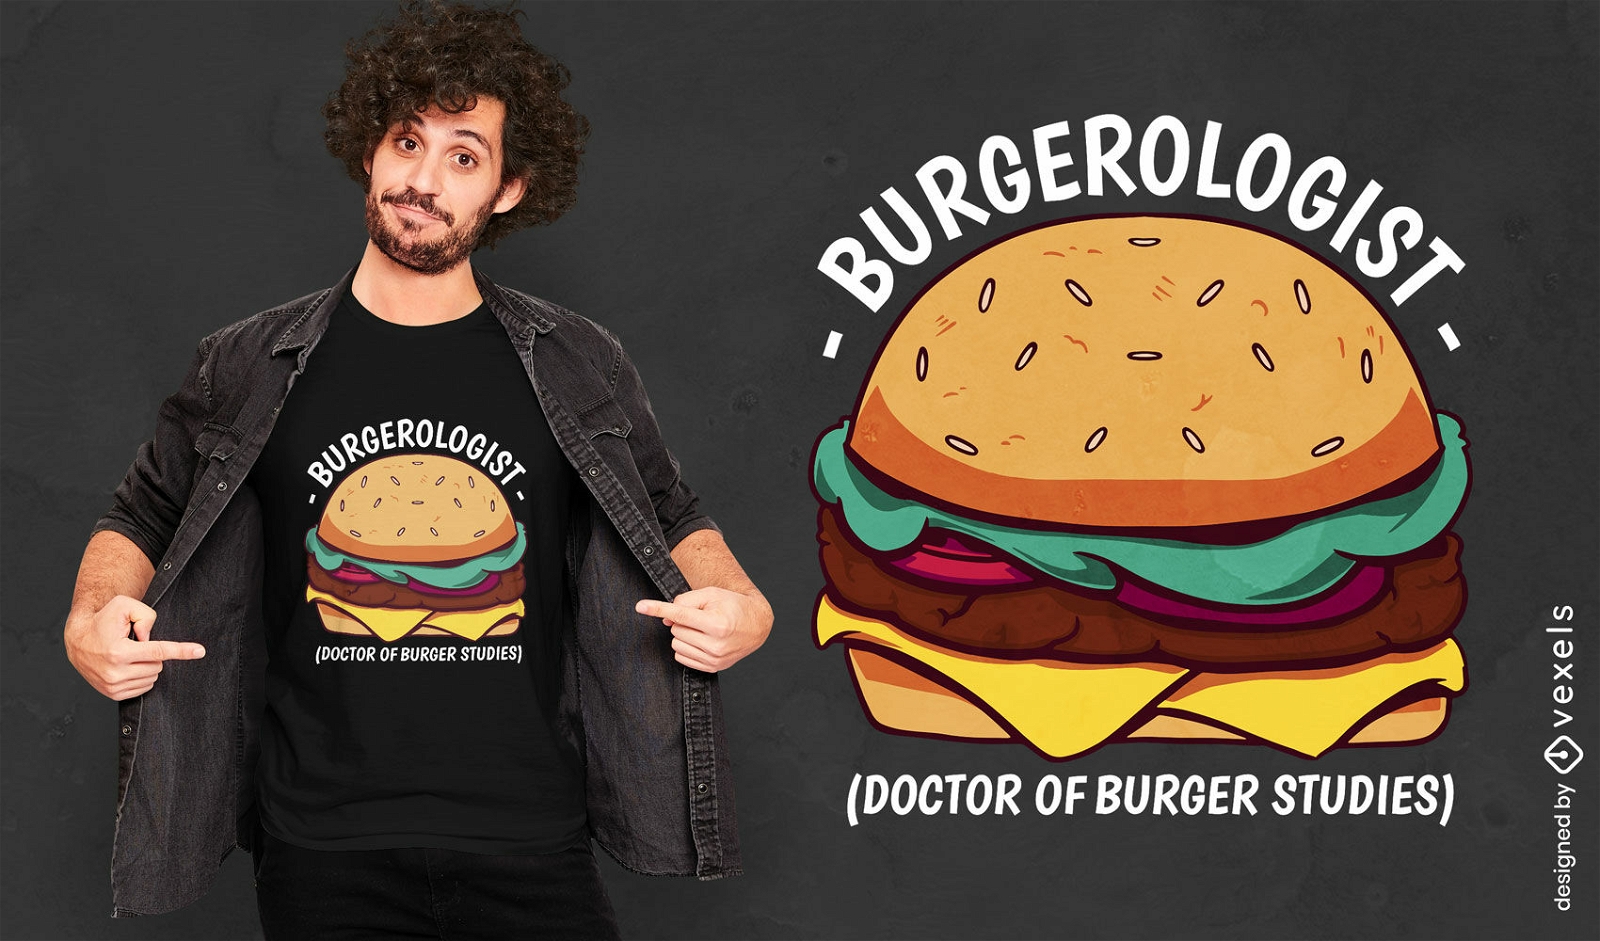 Burger doctor t-shirt design